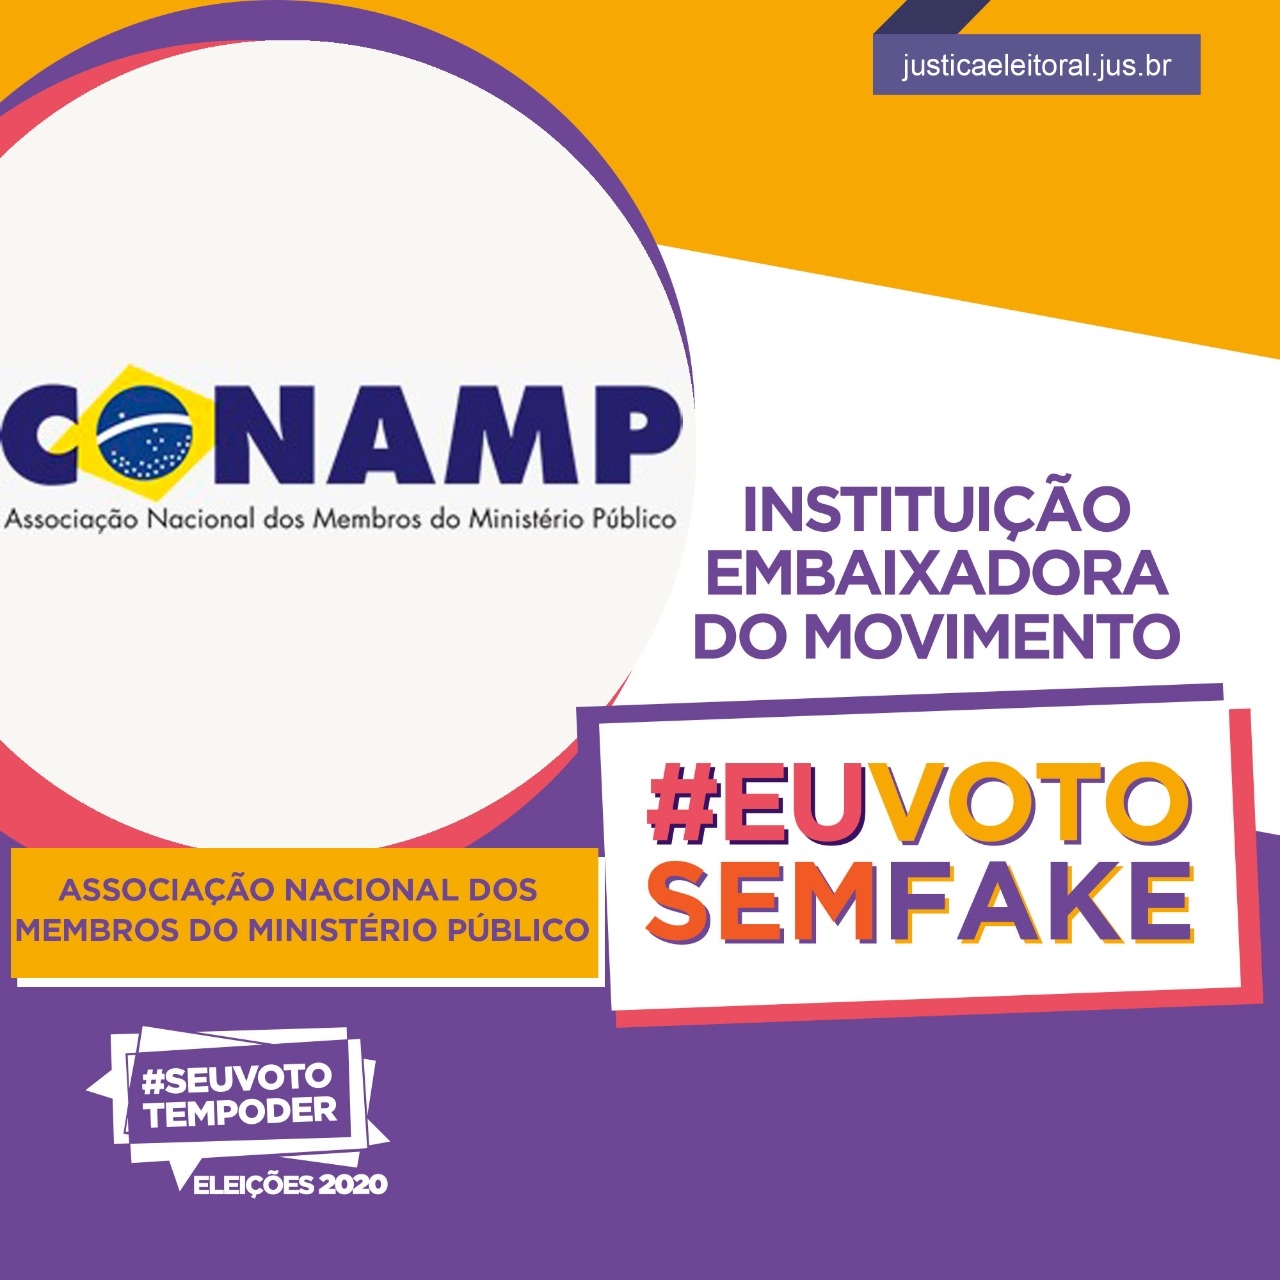 CONAMP é embaixadora do movimento #EuVotoSemFake capitaneado pelo TSE